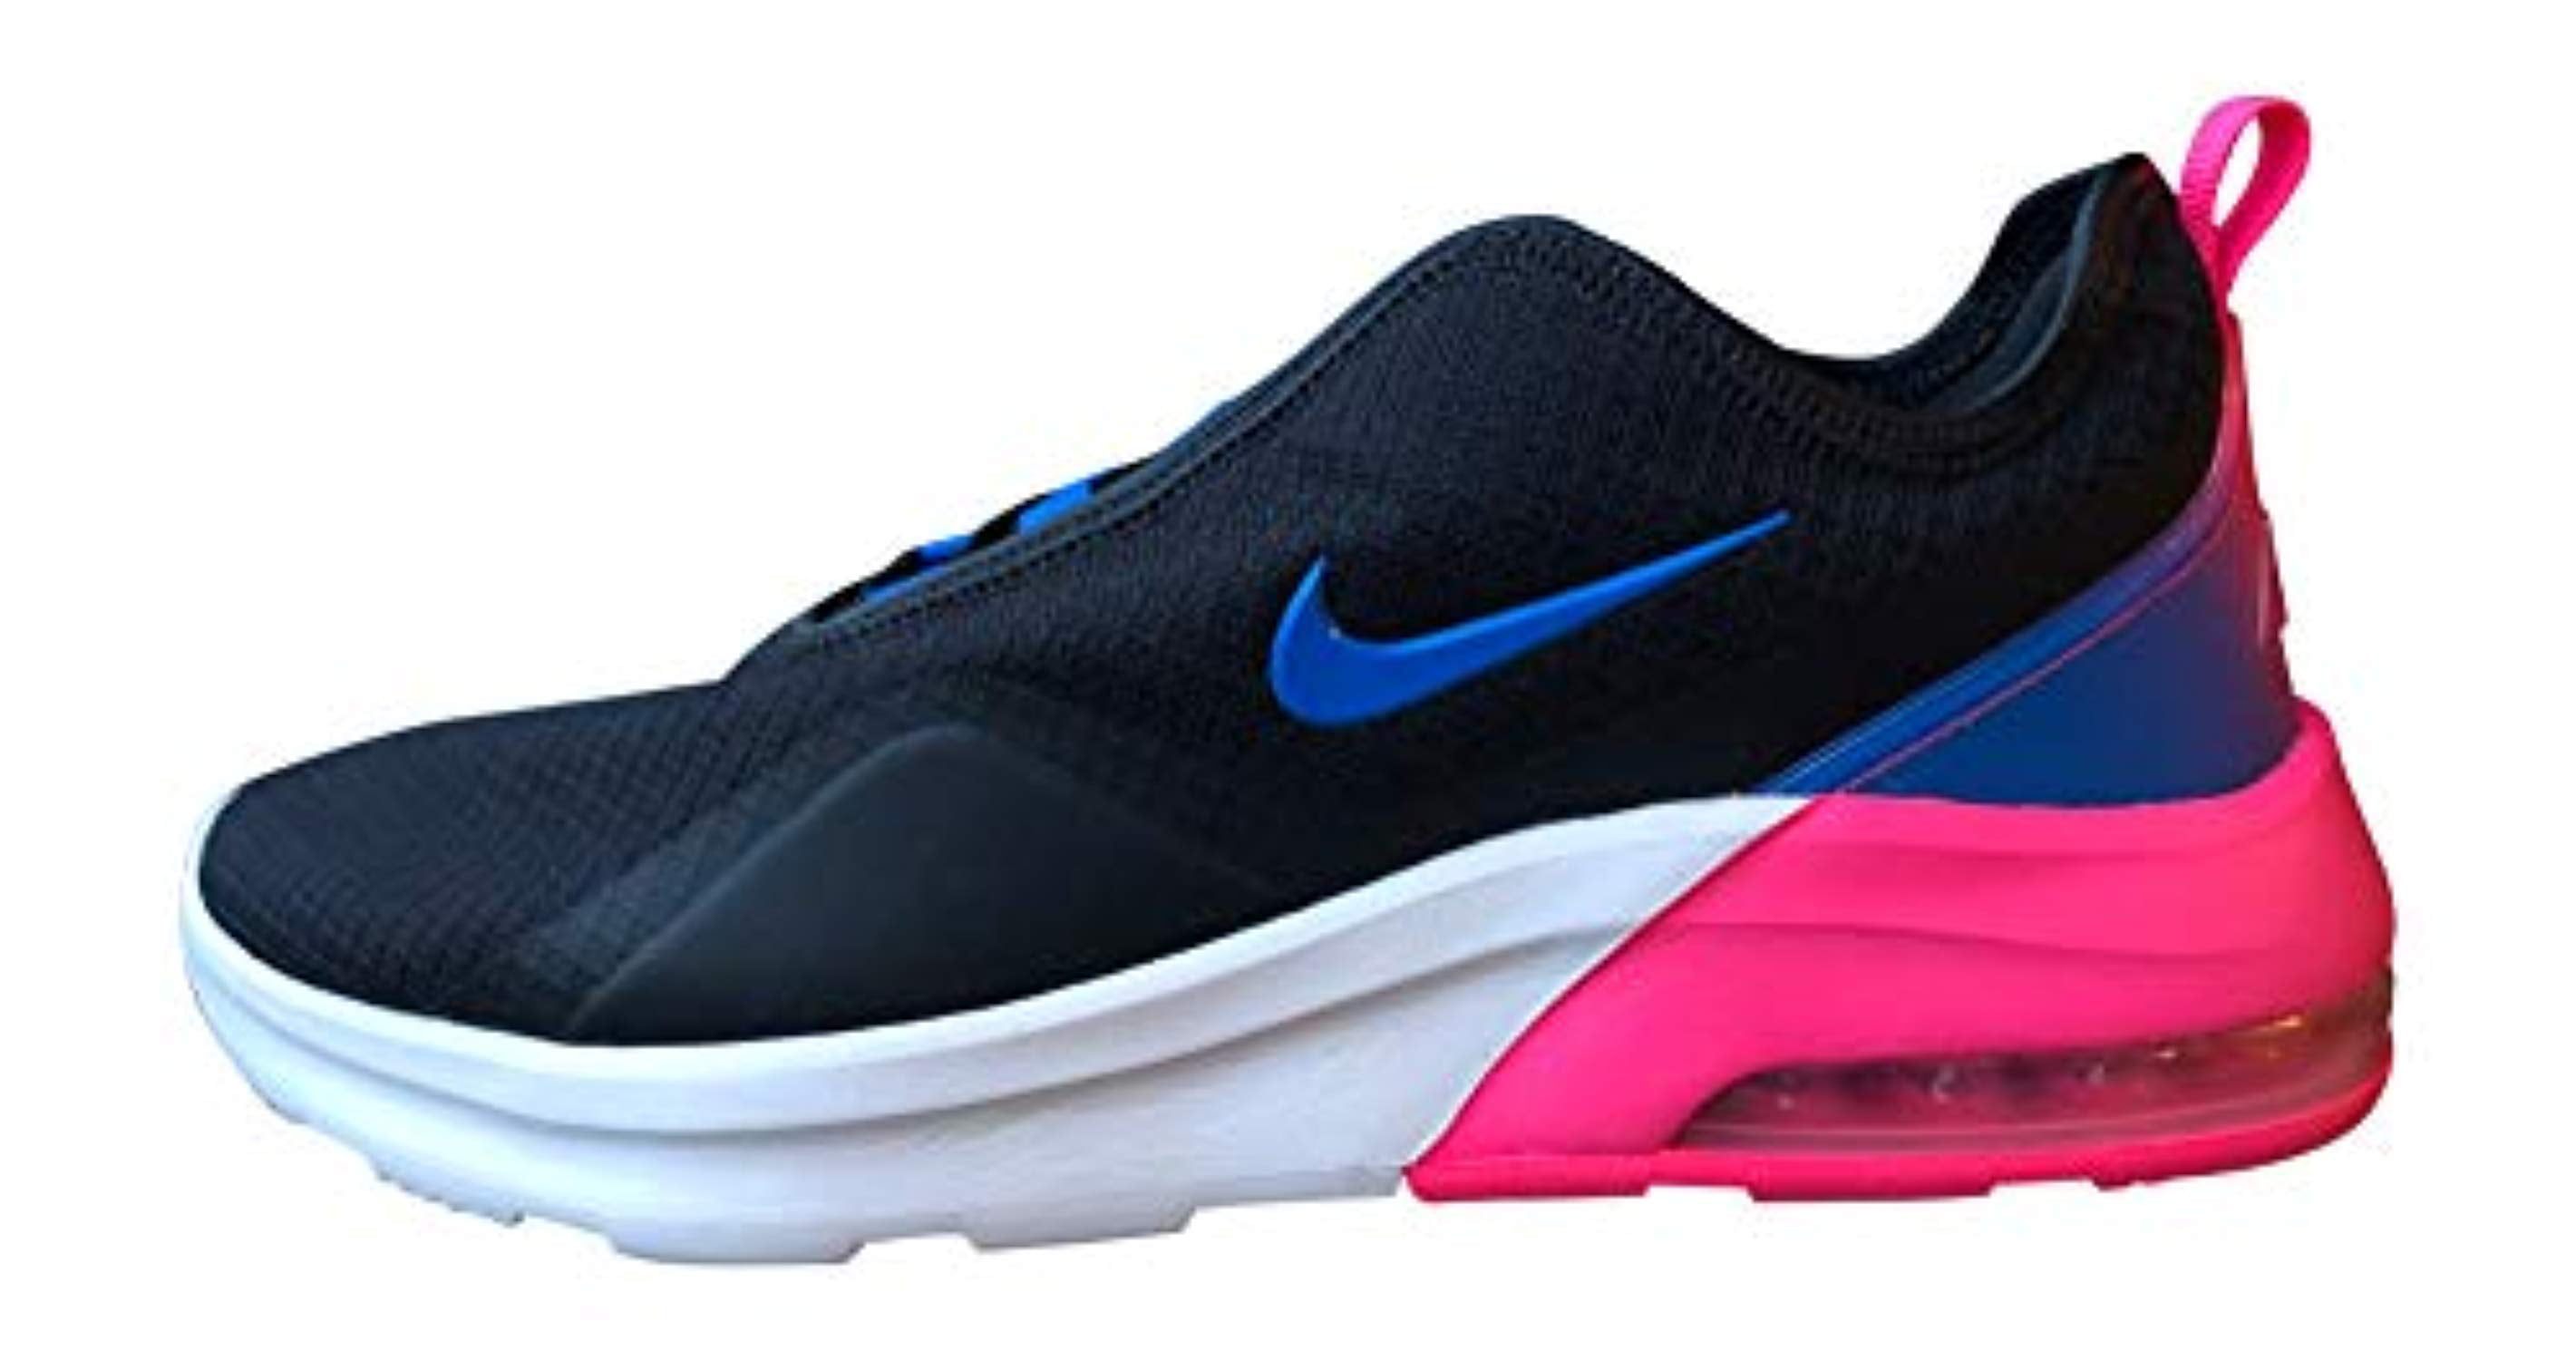 Nike Women's Air Max Motion 2 Running Shoes, 10, Black/Photo BlueHyper